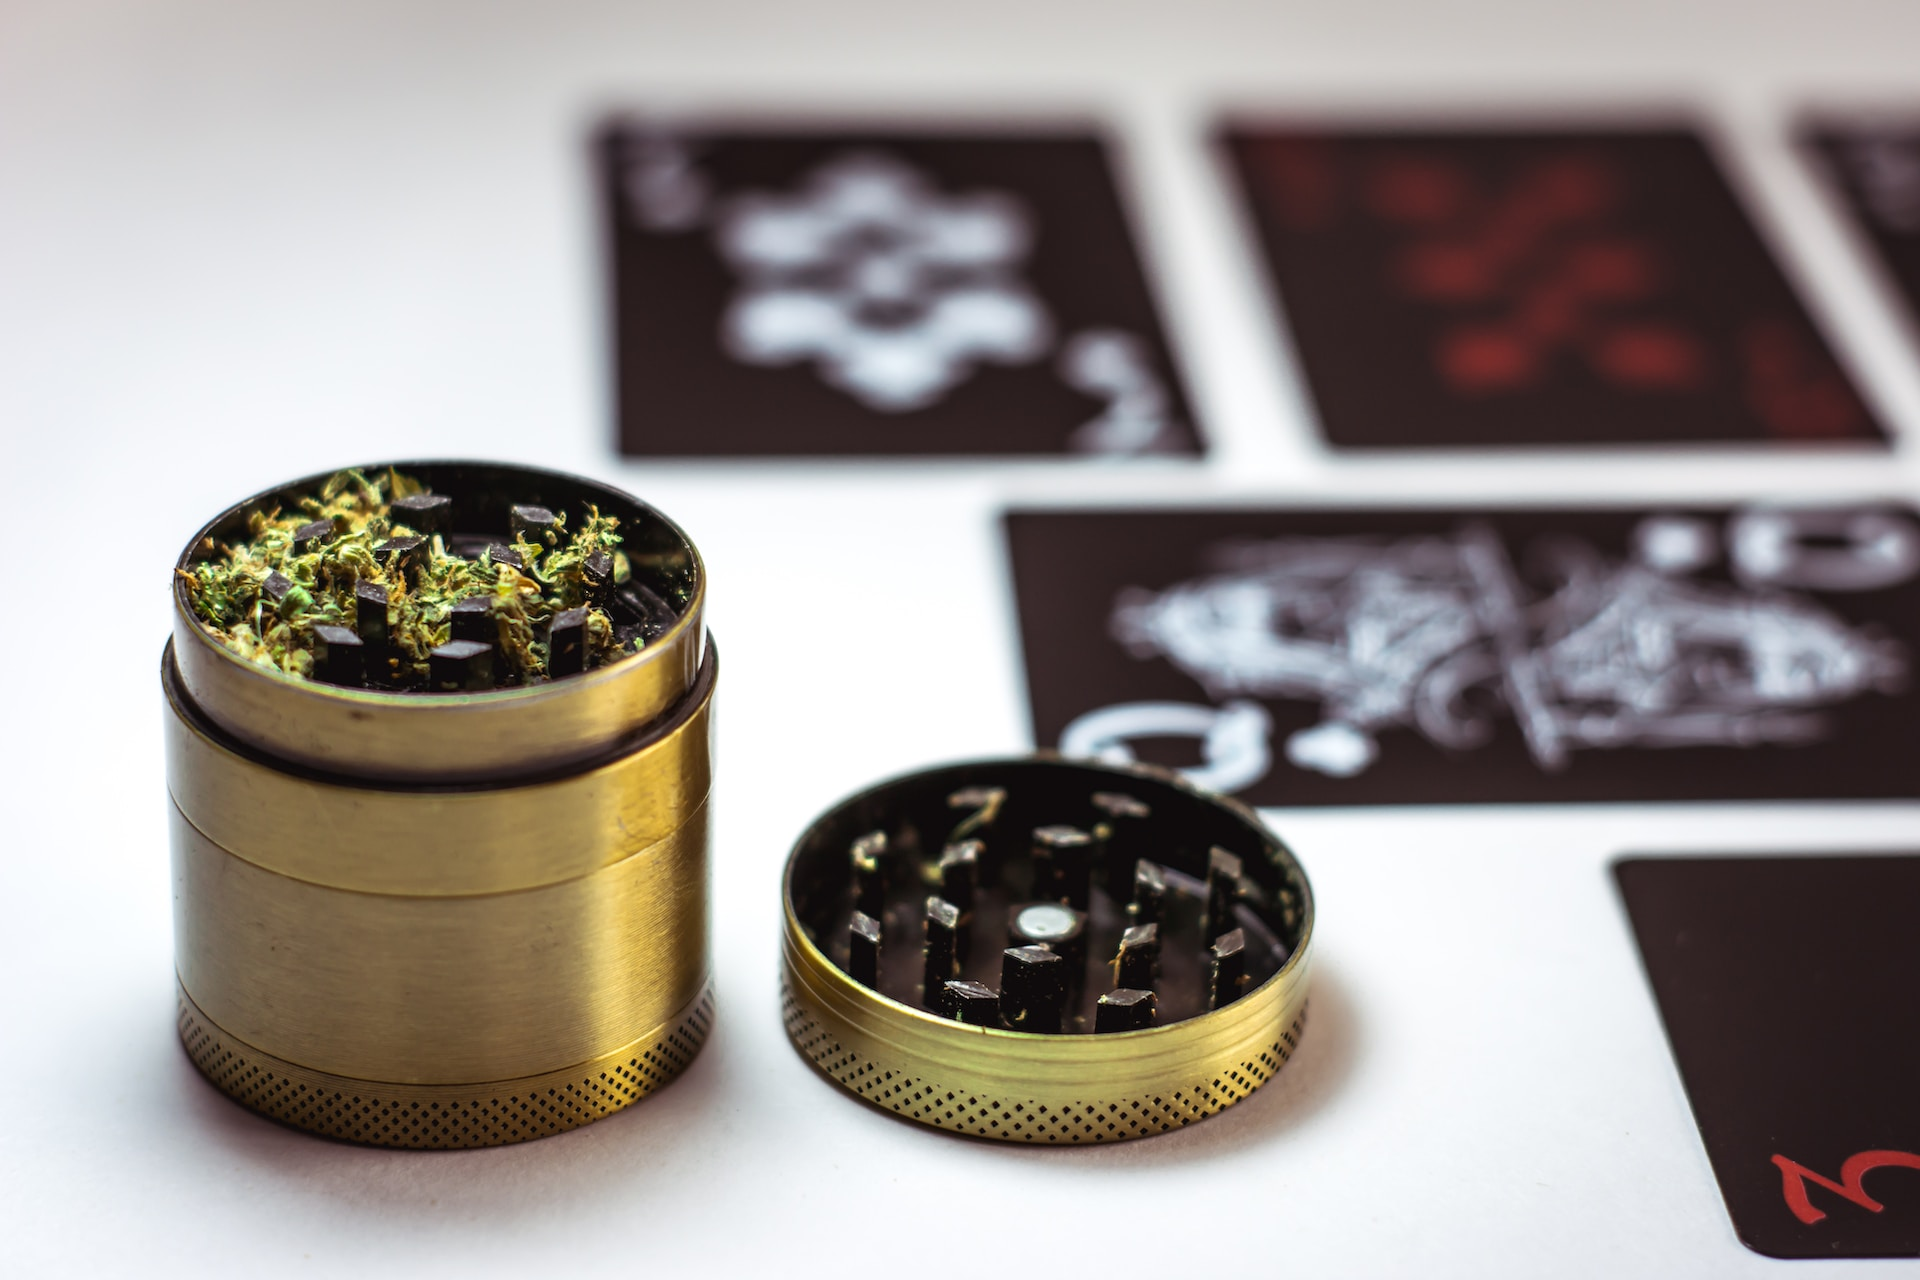 green herb on a grinder